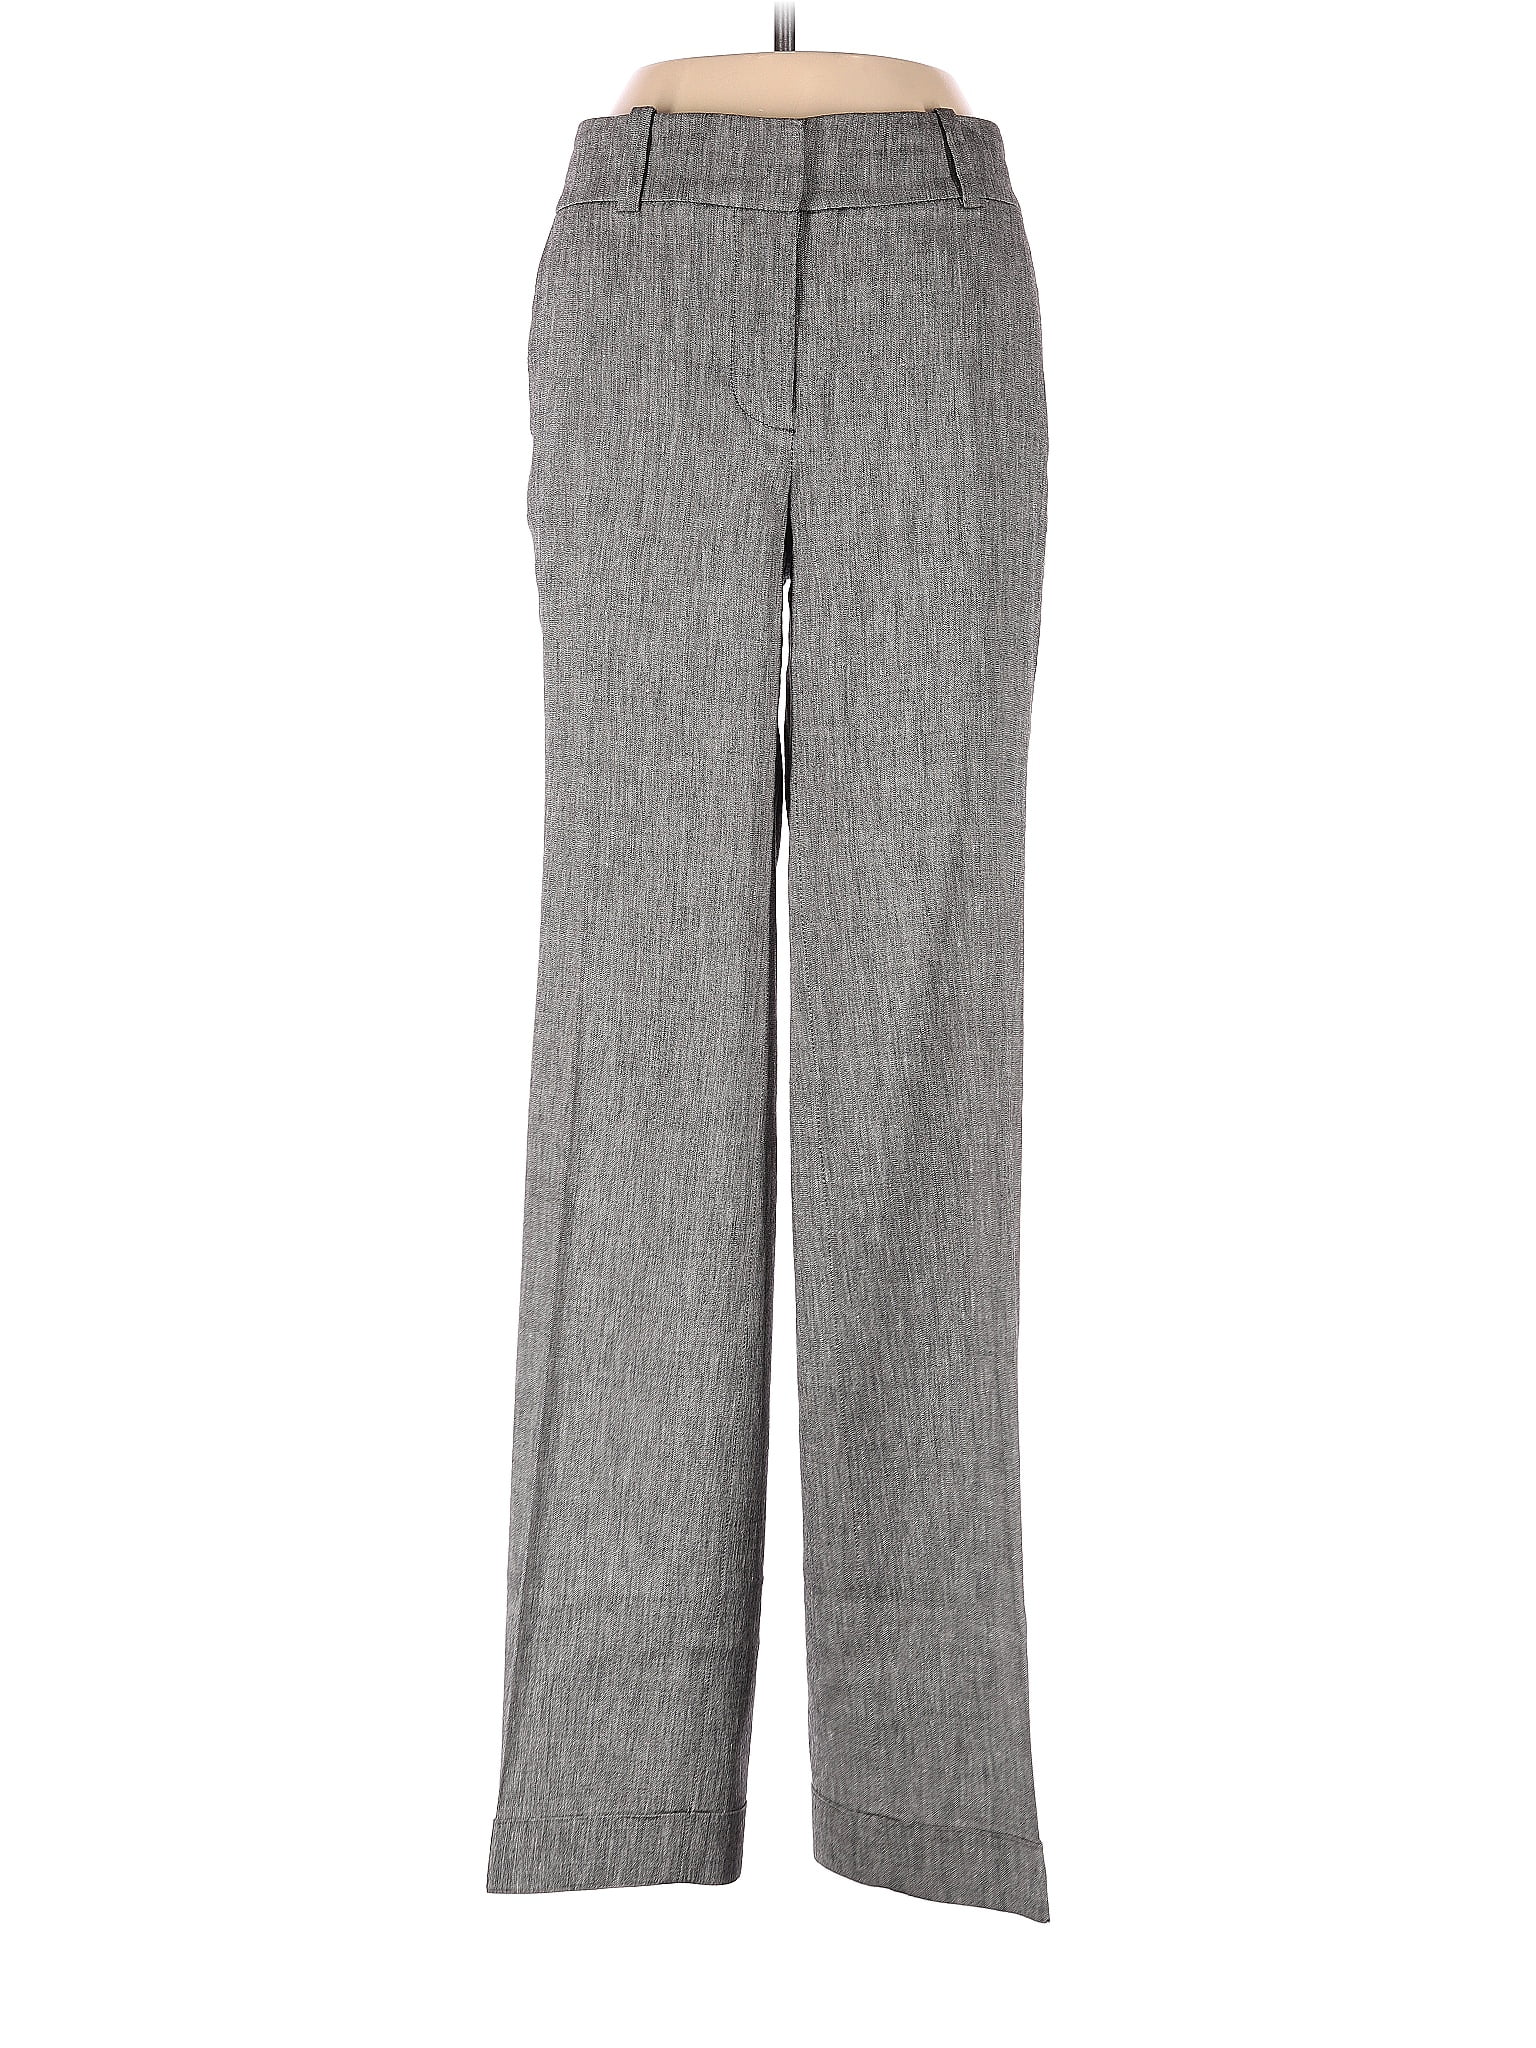 Ann Taylor Gray Linen Pants Size 2 (Petite) - 73% off | thredUP